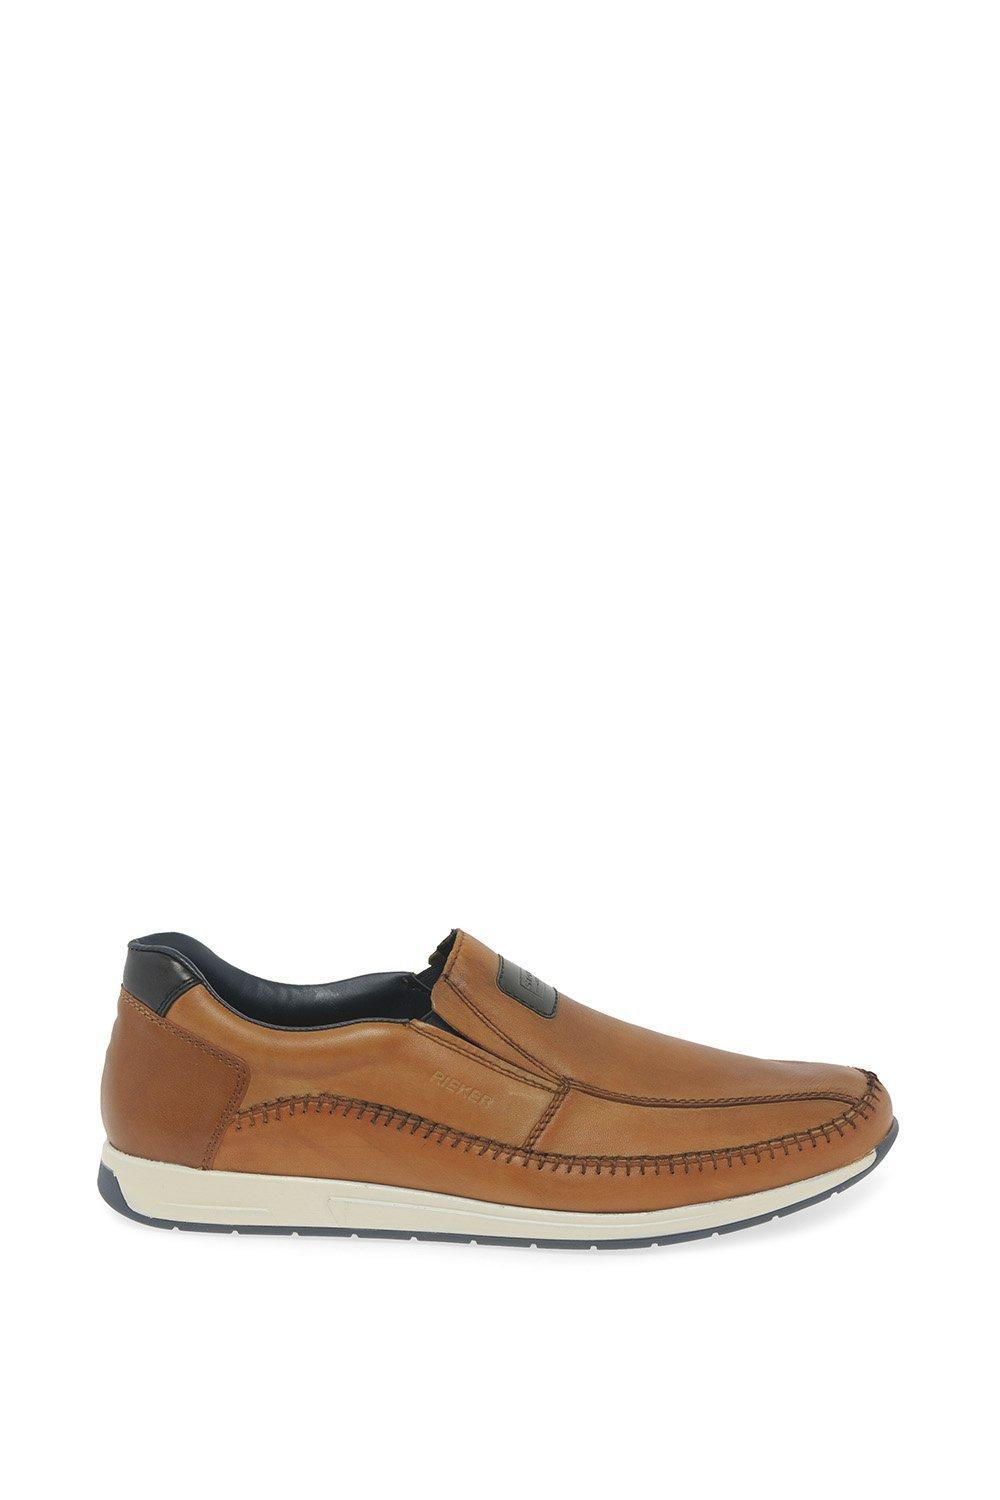 Туфли без шнуровки 'Tempo' Rieker, коричневый туфли без шнуровки benjy ii bugatti коричневый